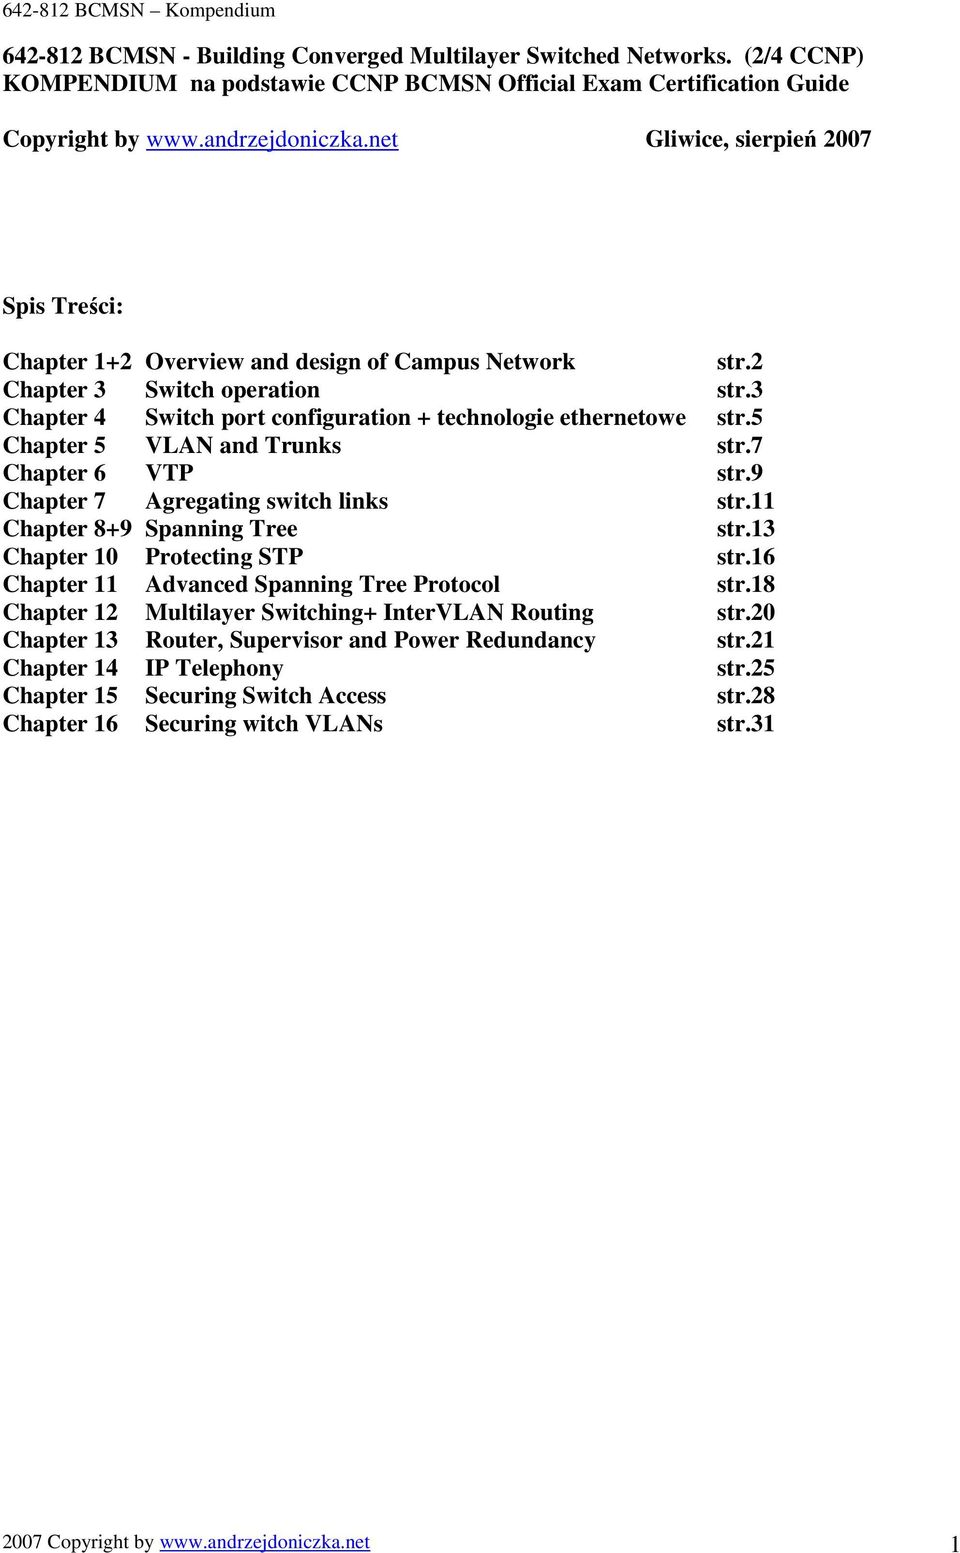 5 Chapter 5 VLAN and Trunks str.7 Chapter 6 VTP str.9 Chapter 7 Agregating switch links str.11 Chapter 8+9 Spanning Tree str.13 Chapter 10 Protecting STP str.